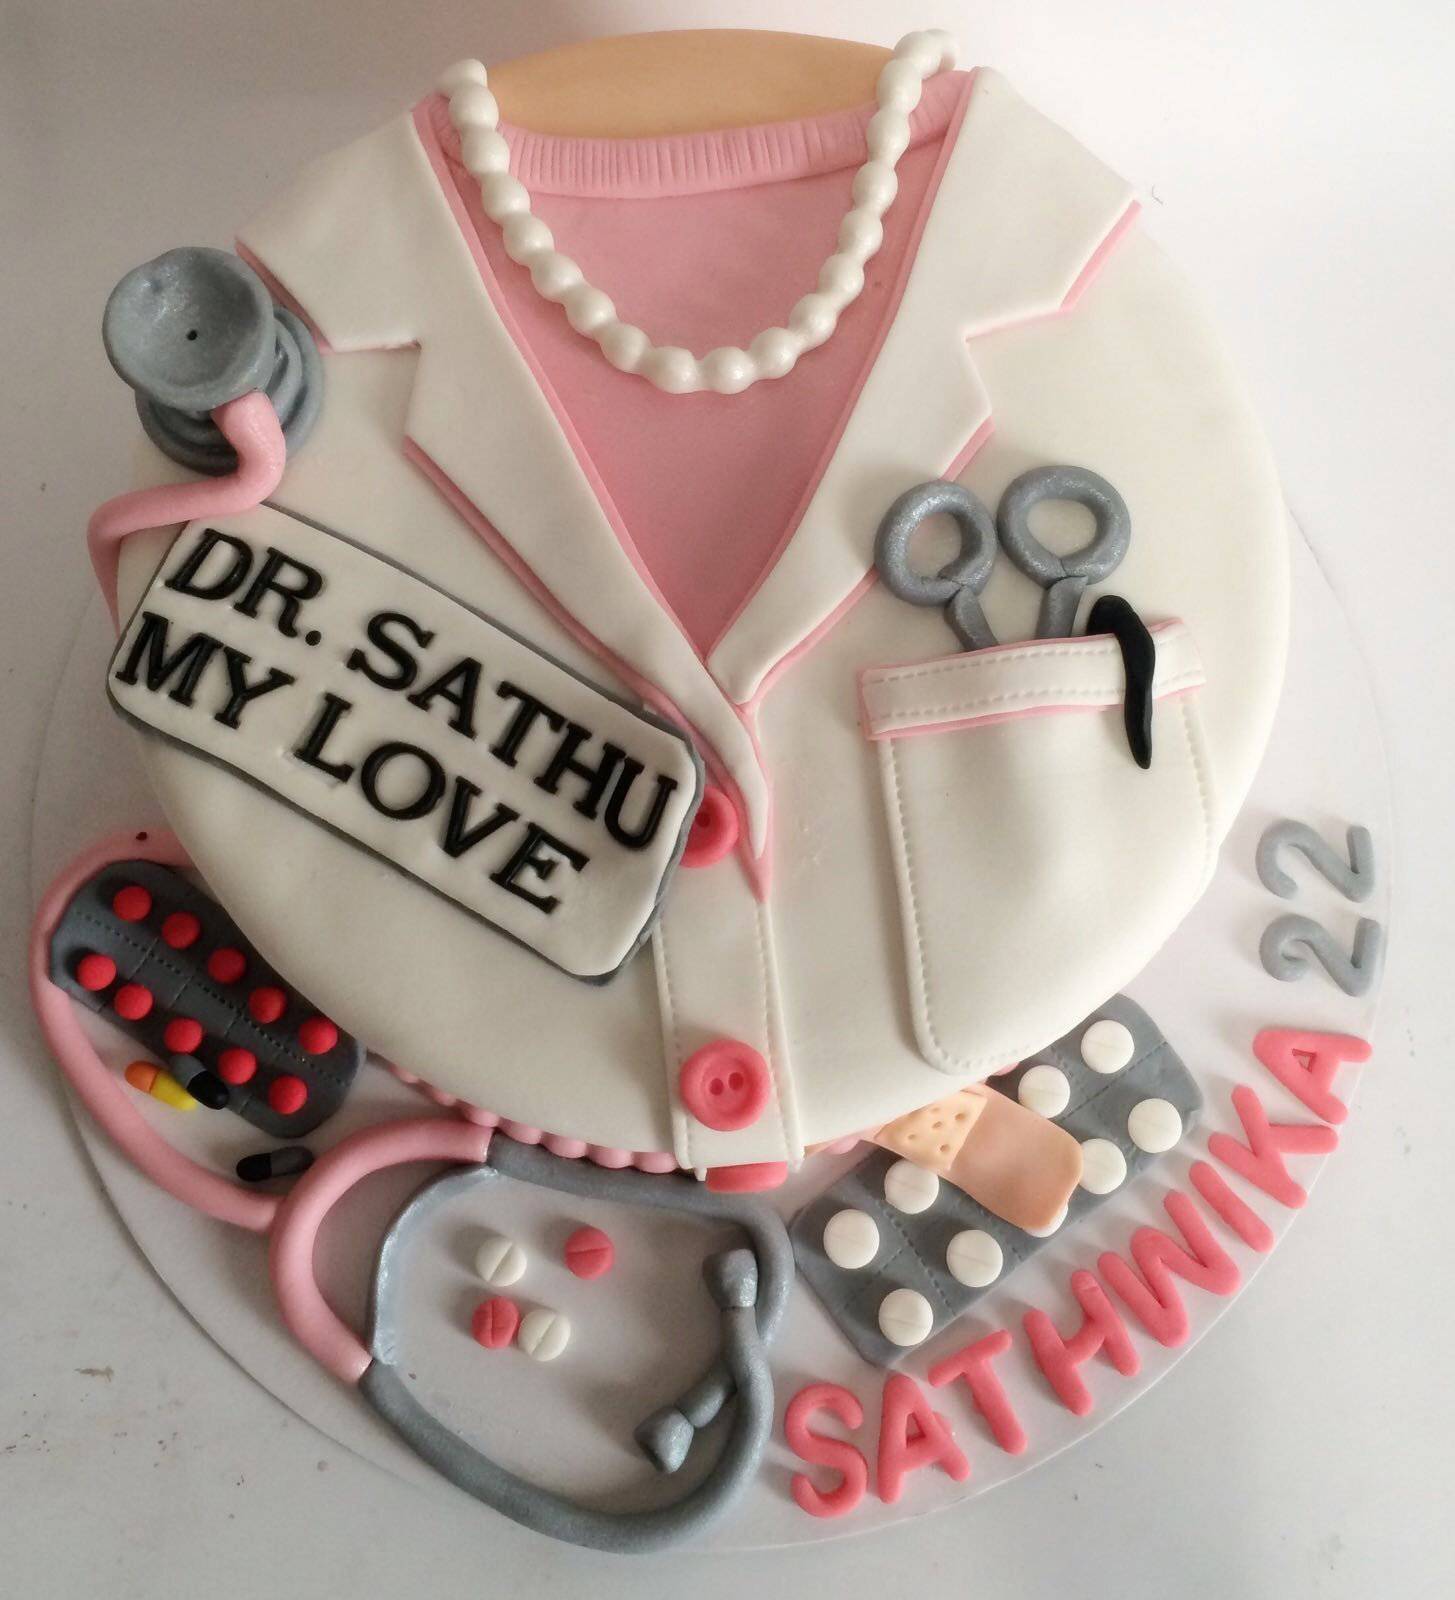 Send designer doctor theme cake online by GiftJaipur in Rajasthan